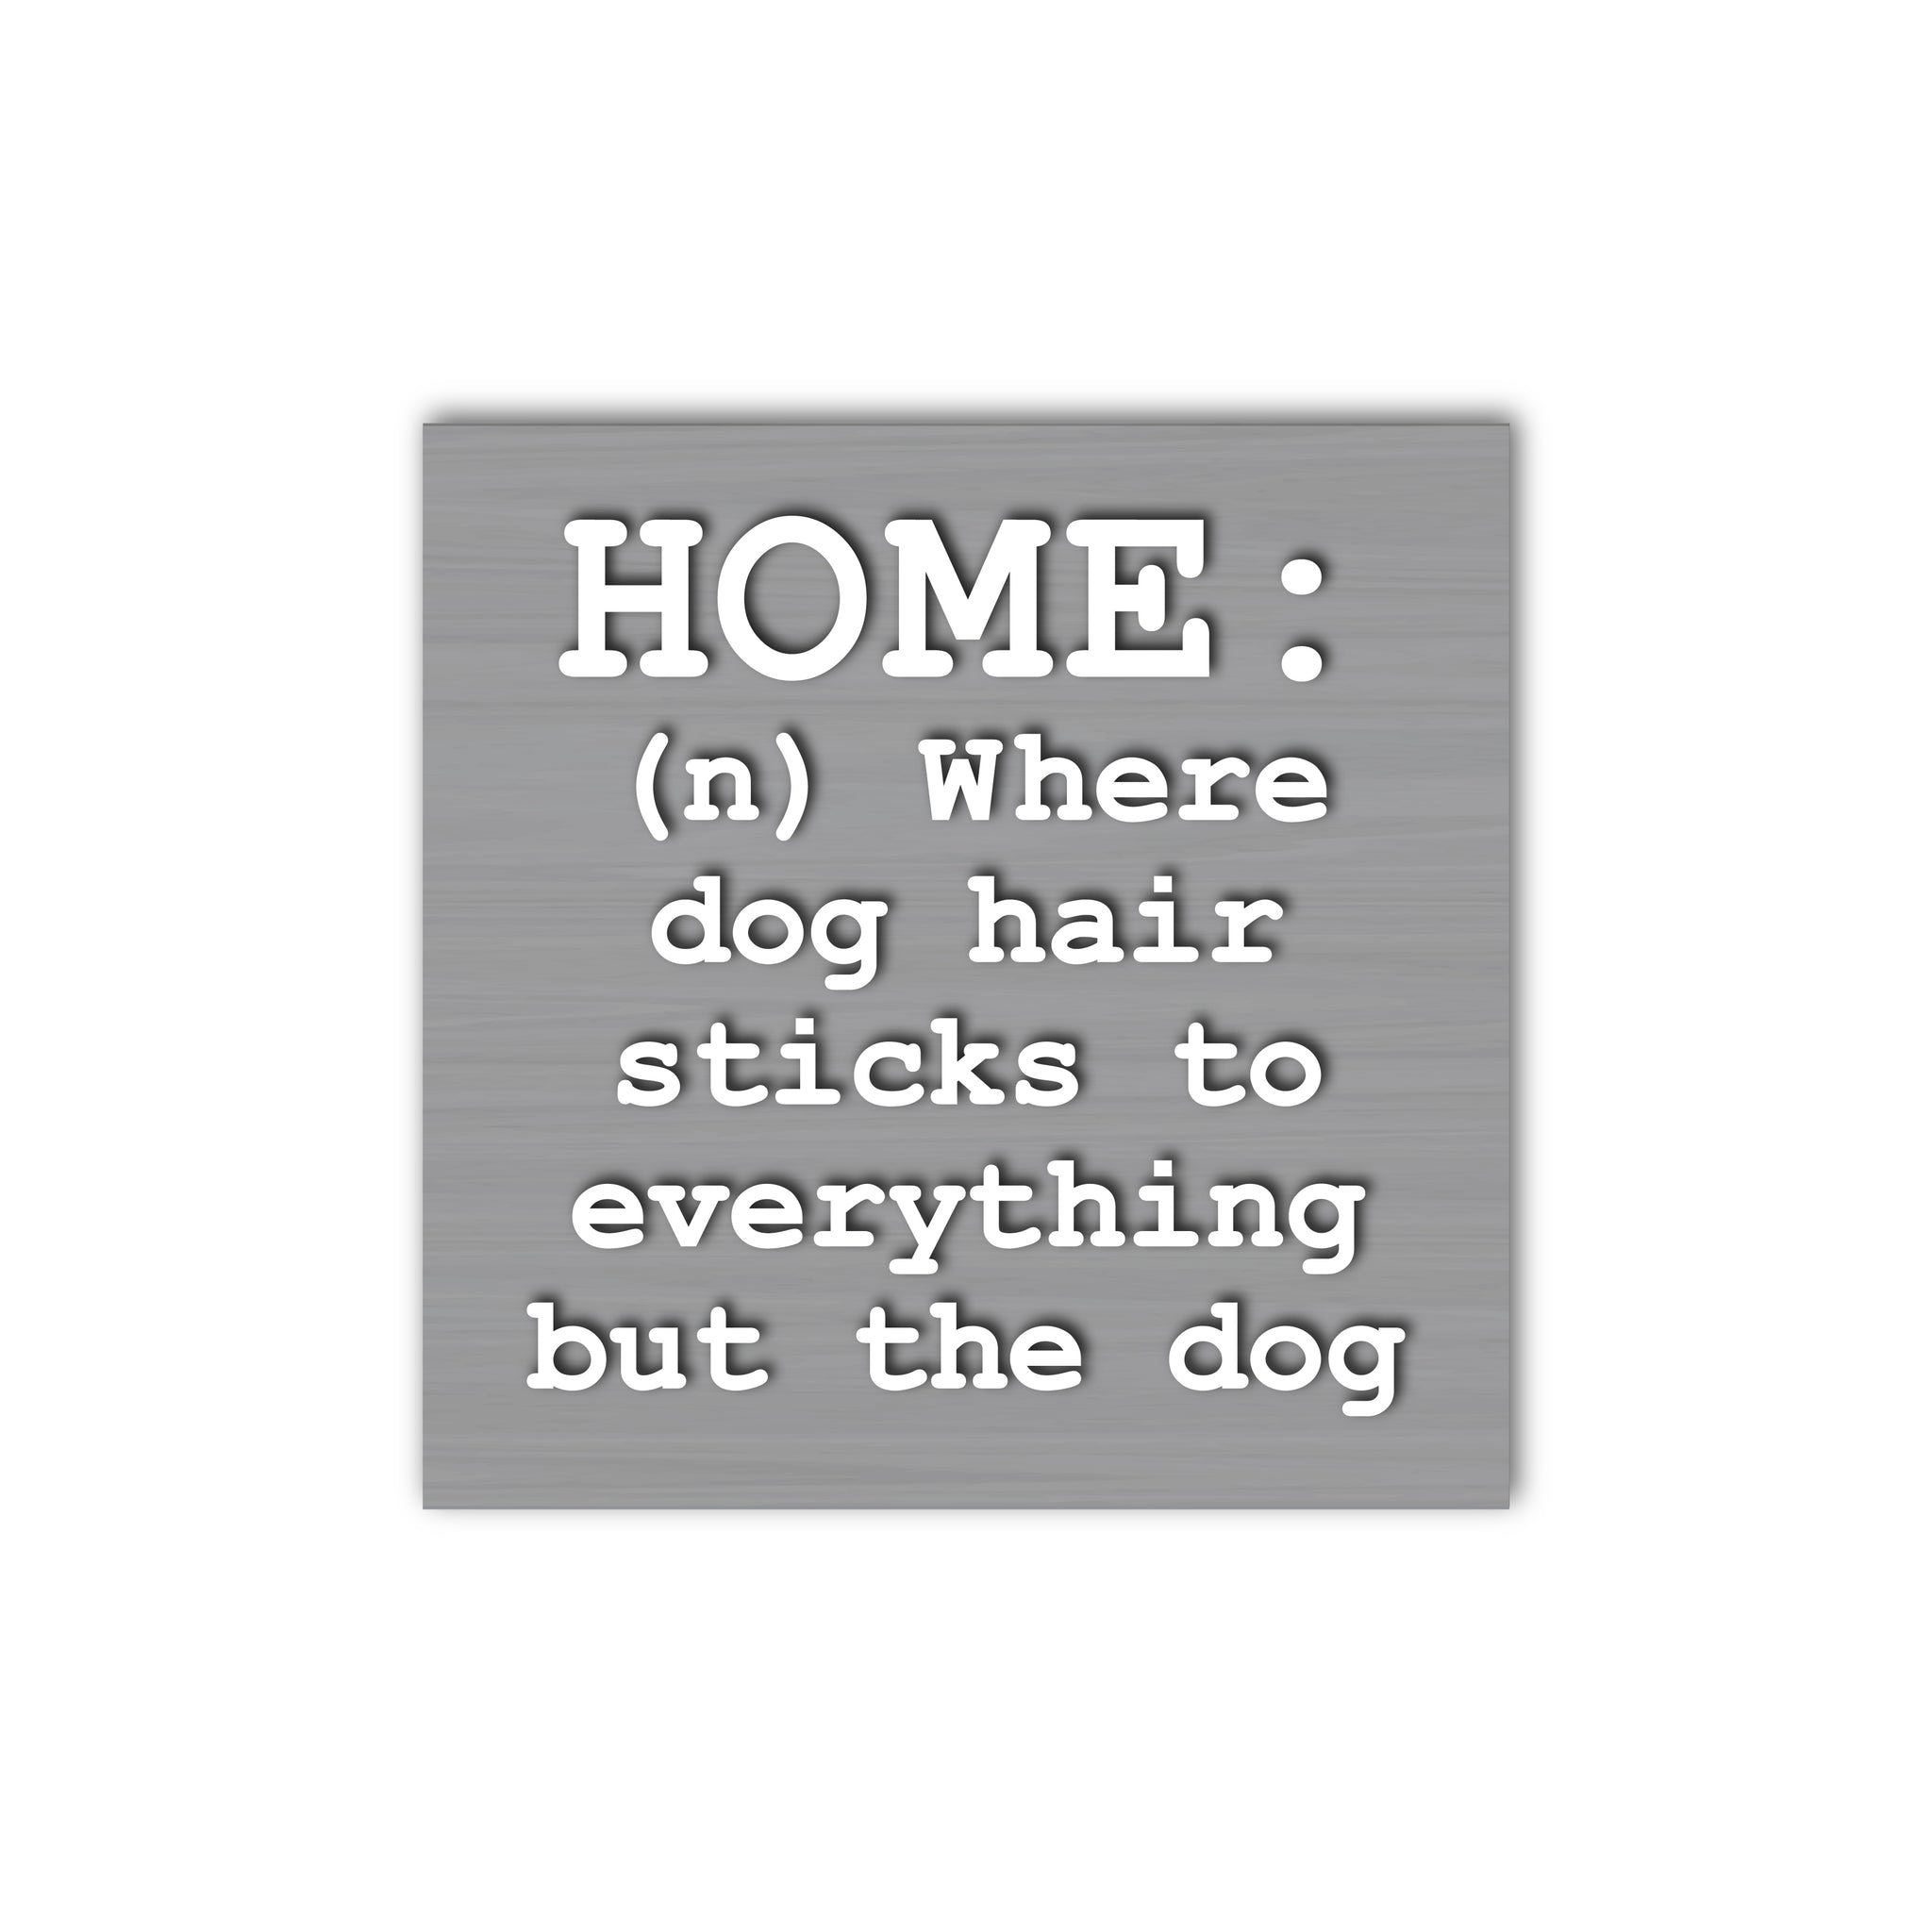 Home (n) Dog Hair